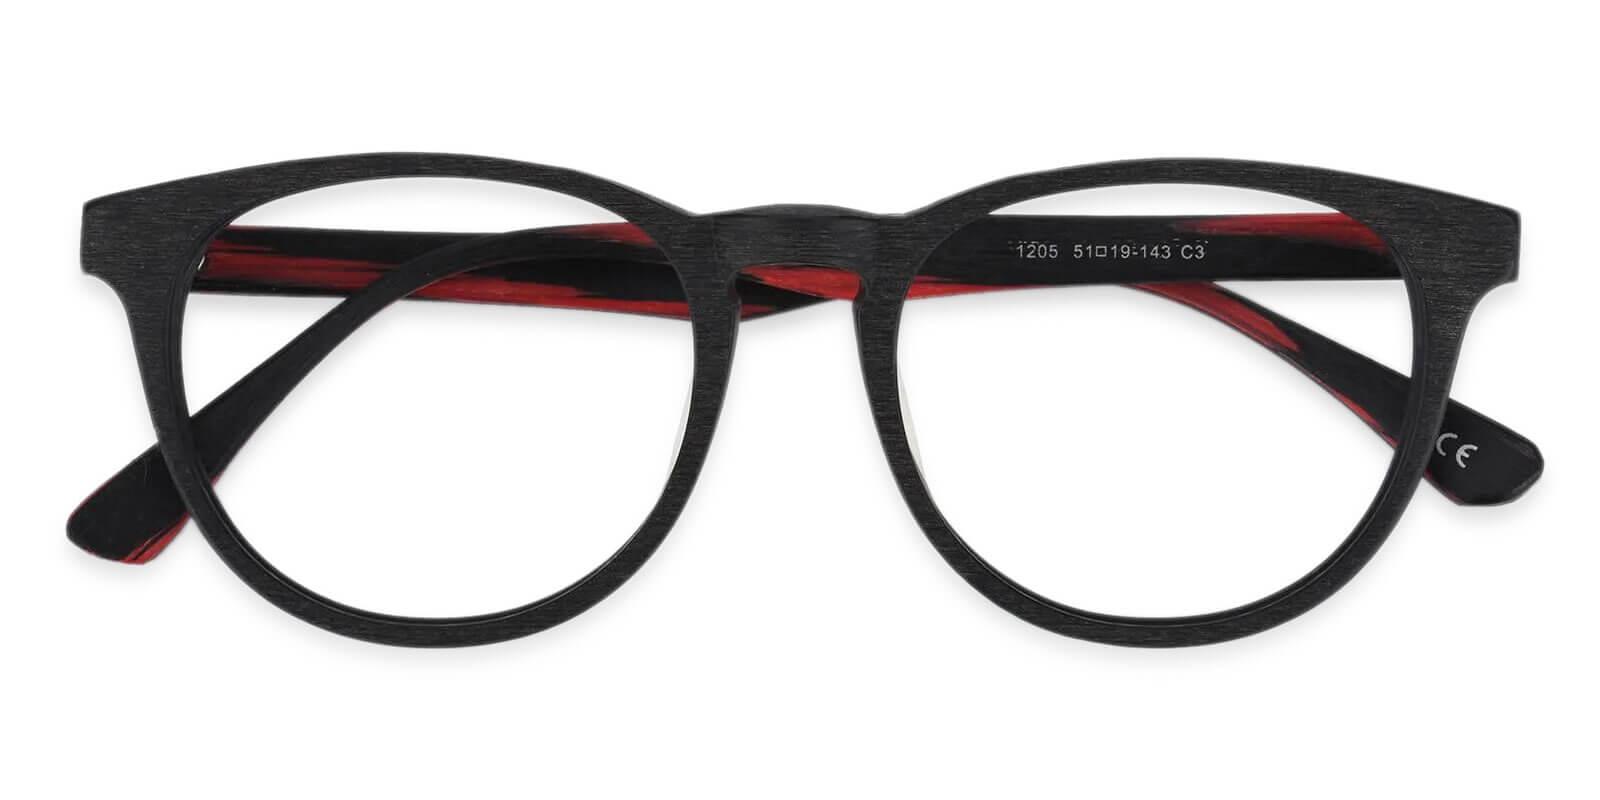 Pacific Red TR Eyeglasses , UniversalBridgeFit Frames from ABBE Glasses